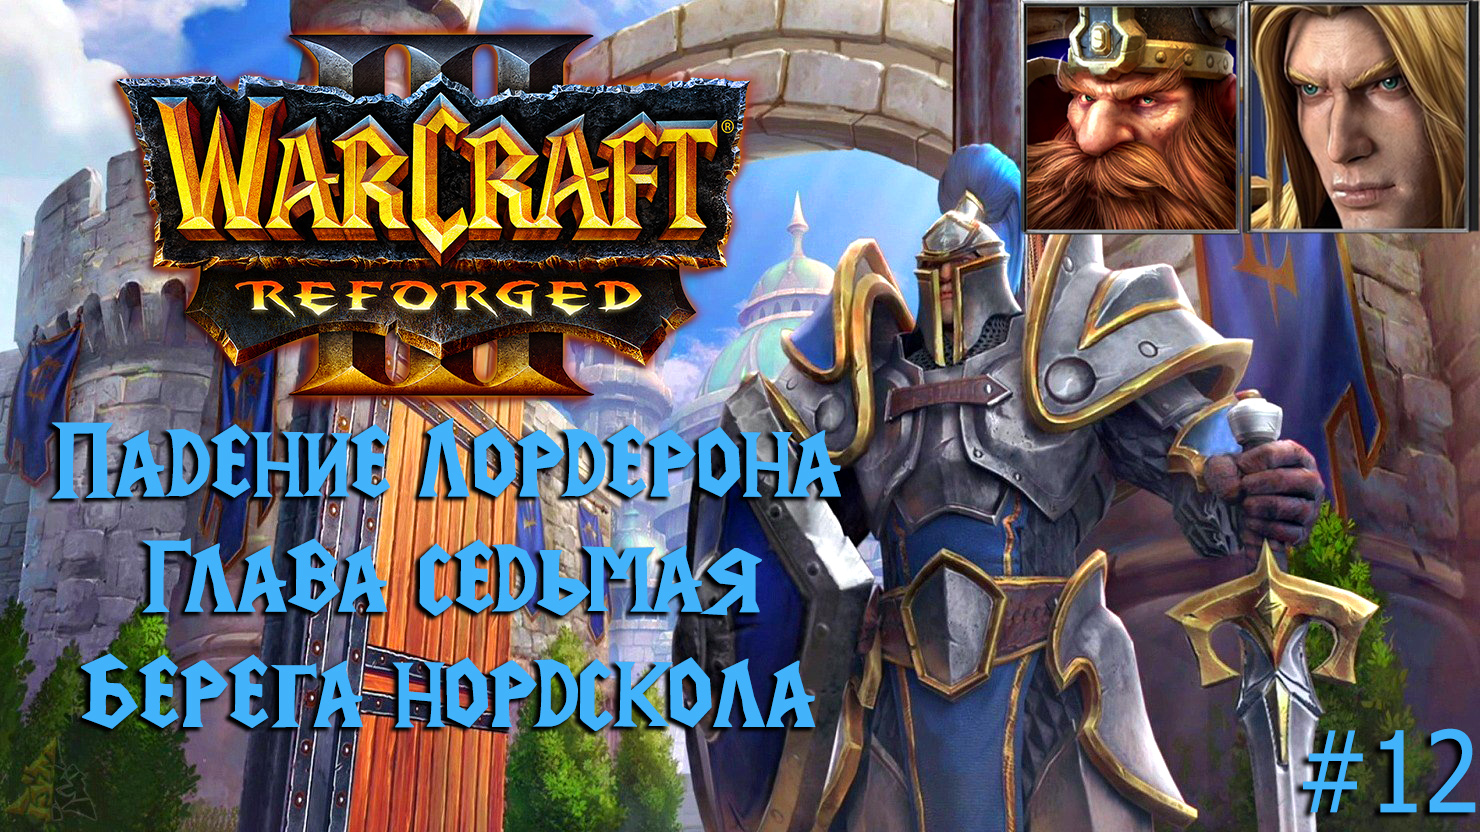 Warcraft III: Reforged | Падение Лордерона | Глава седьмая | Берега Нордскола | #12